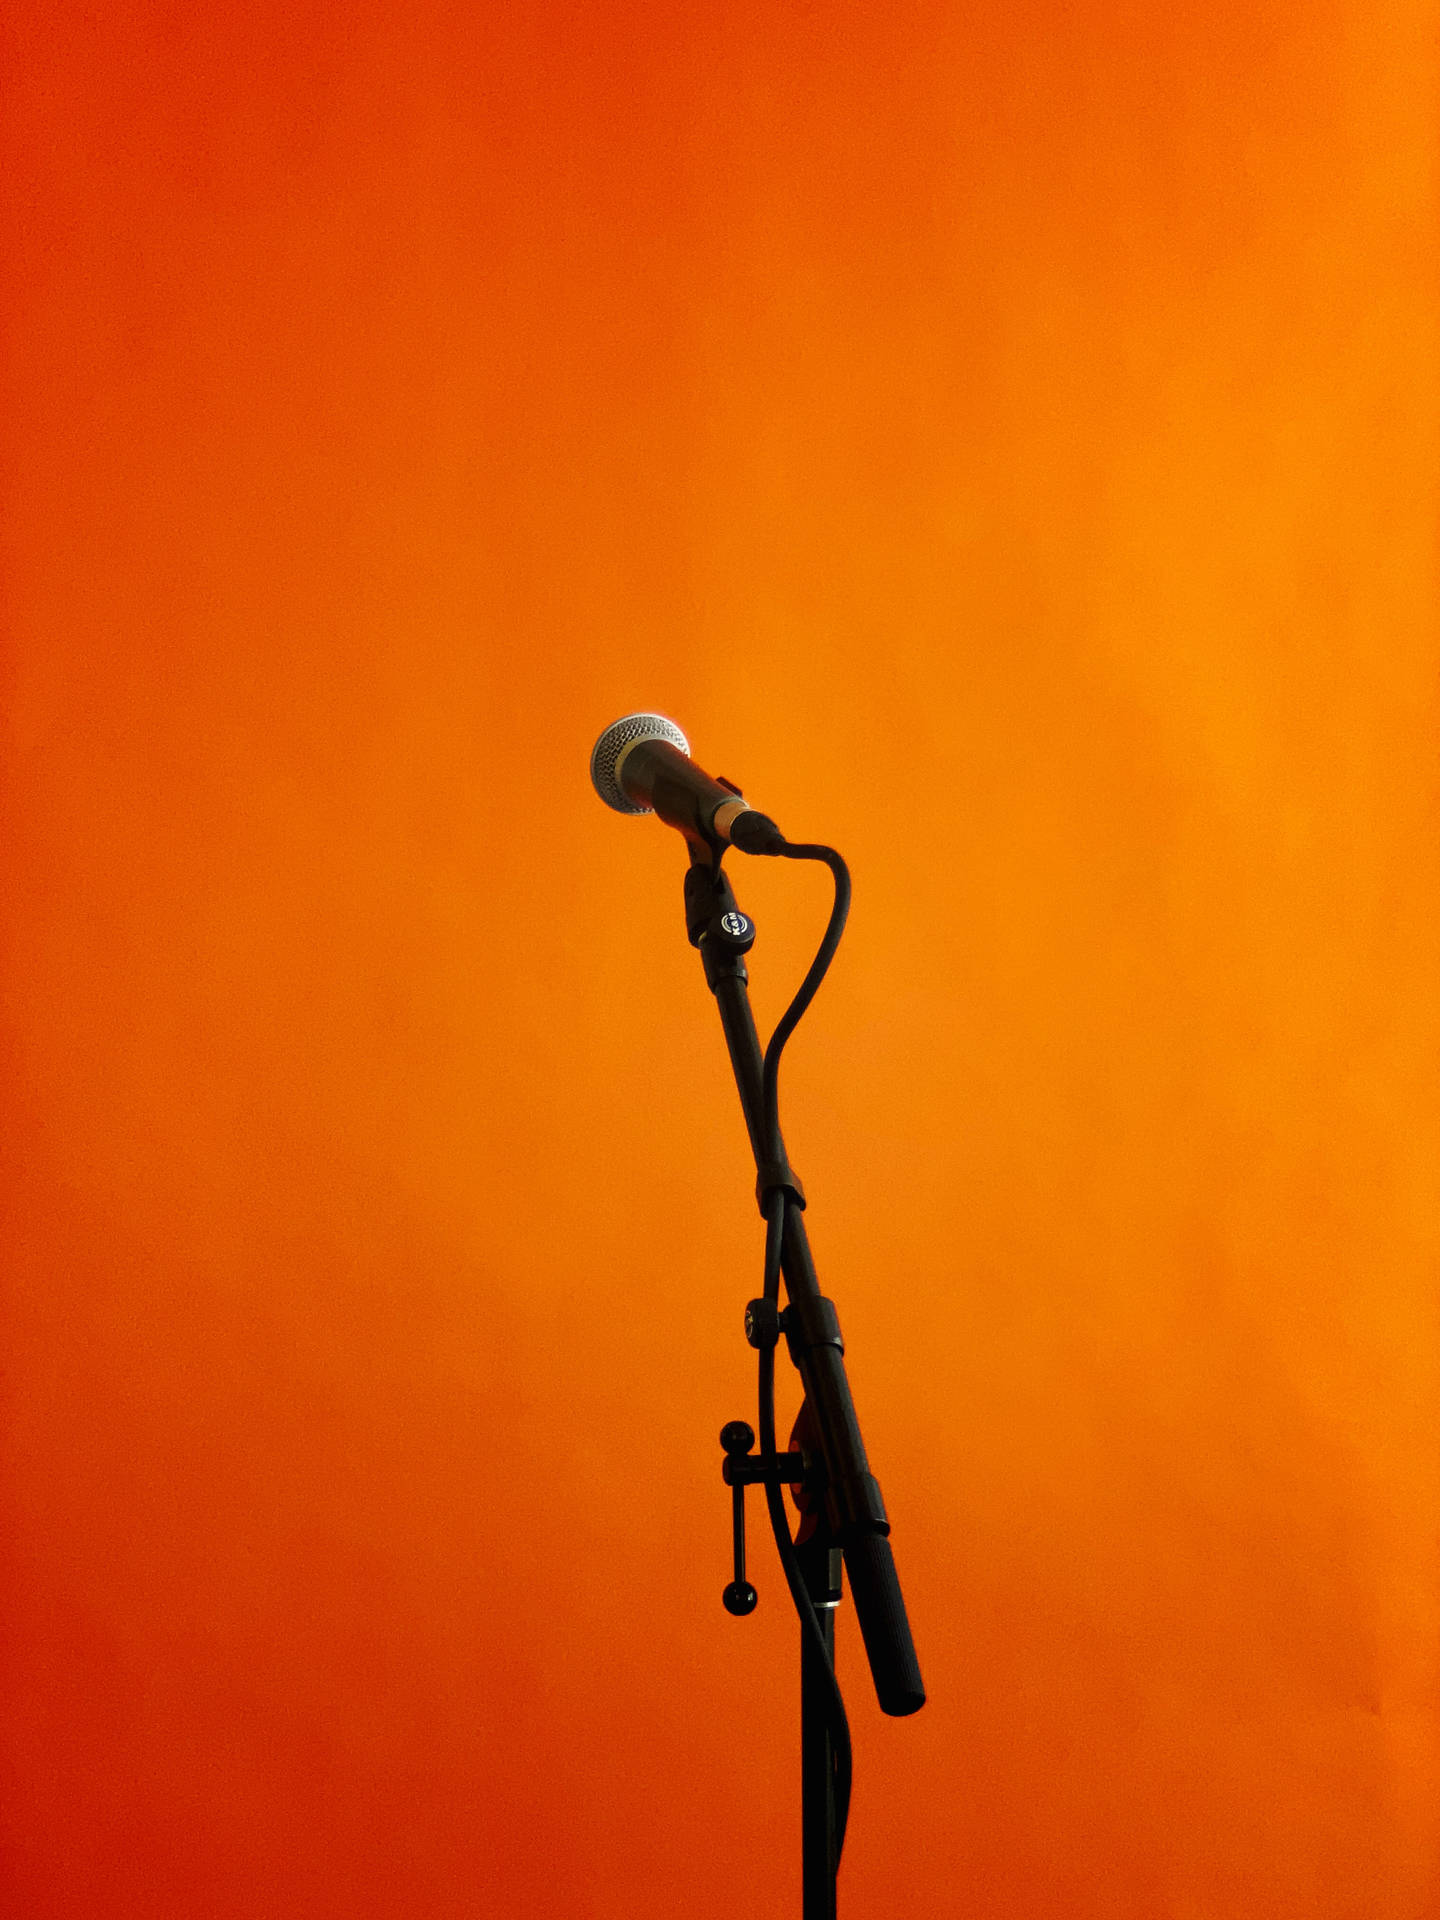 Microphone Stand Against Orange Backdrop SVG